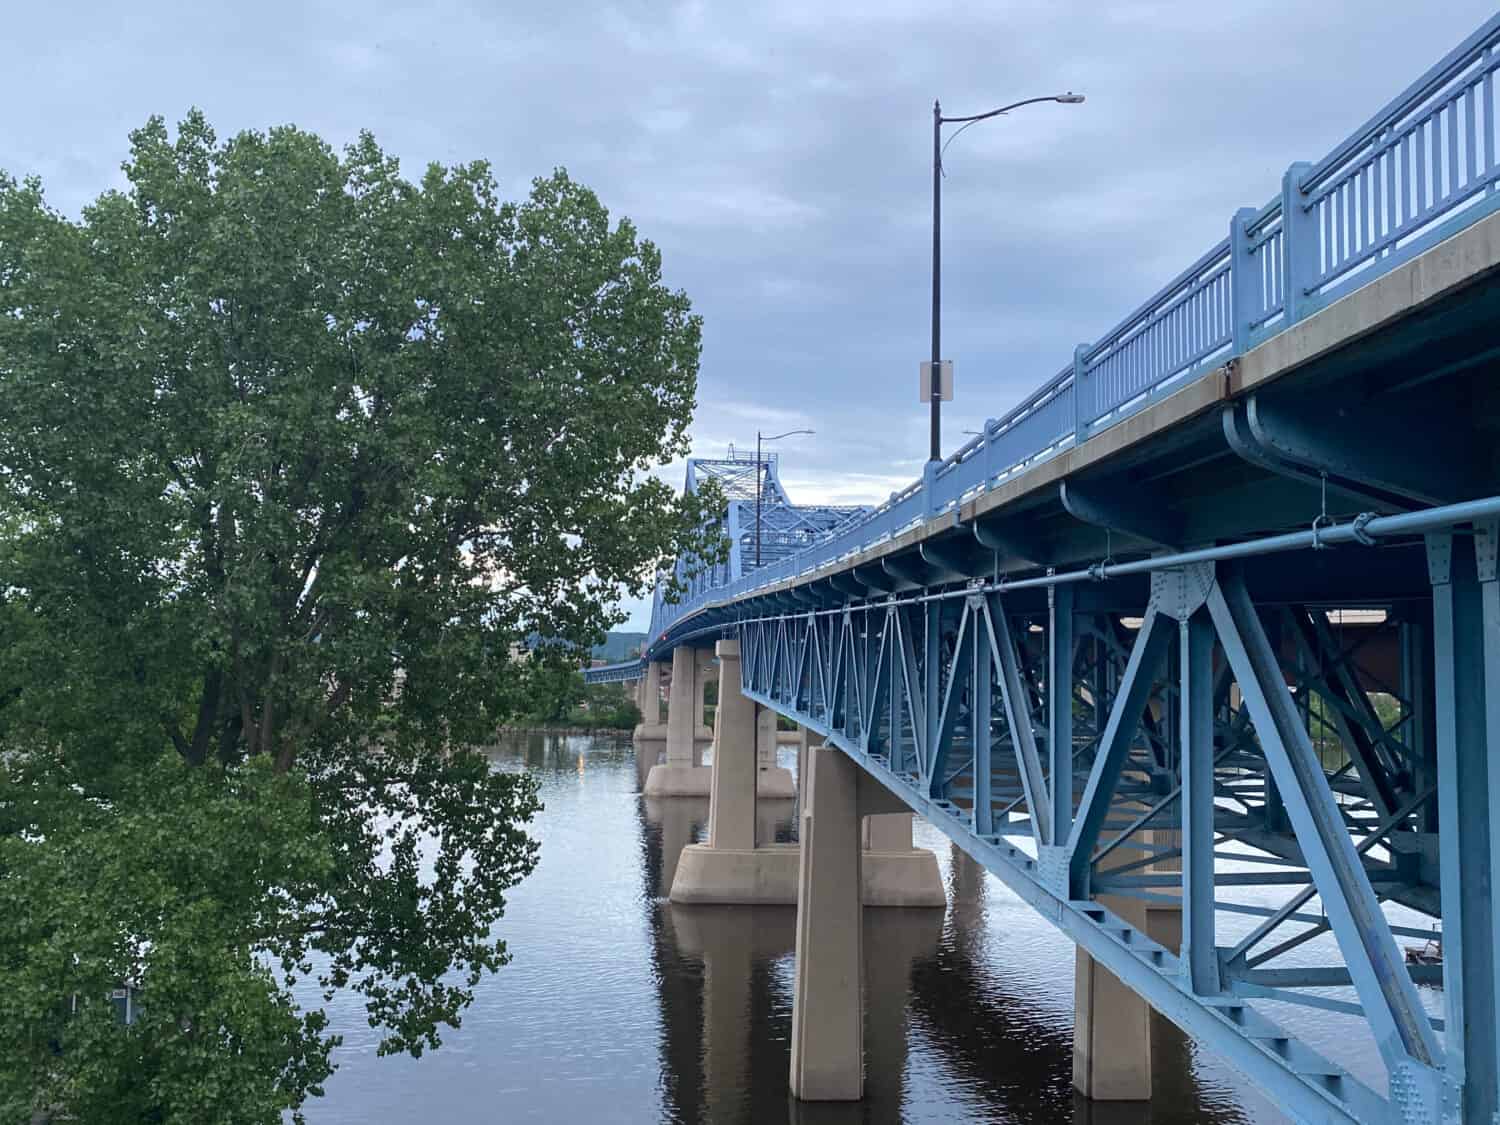 Cass Street Bridge in La Crosse, WI, on the Mississippi River